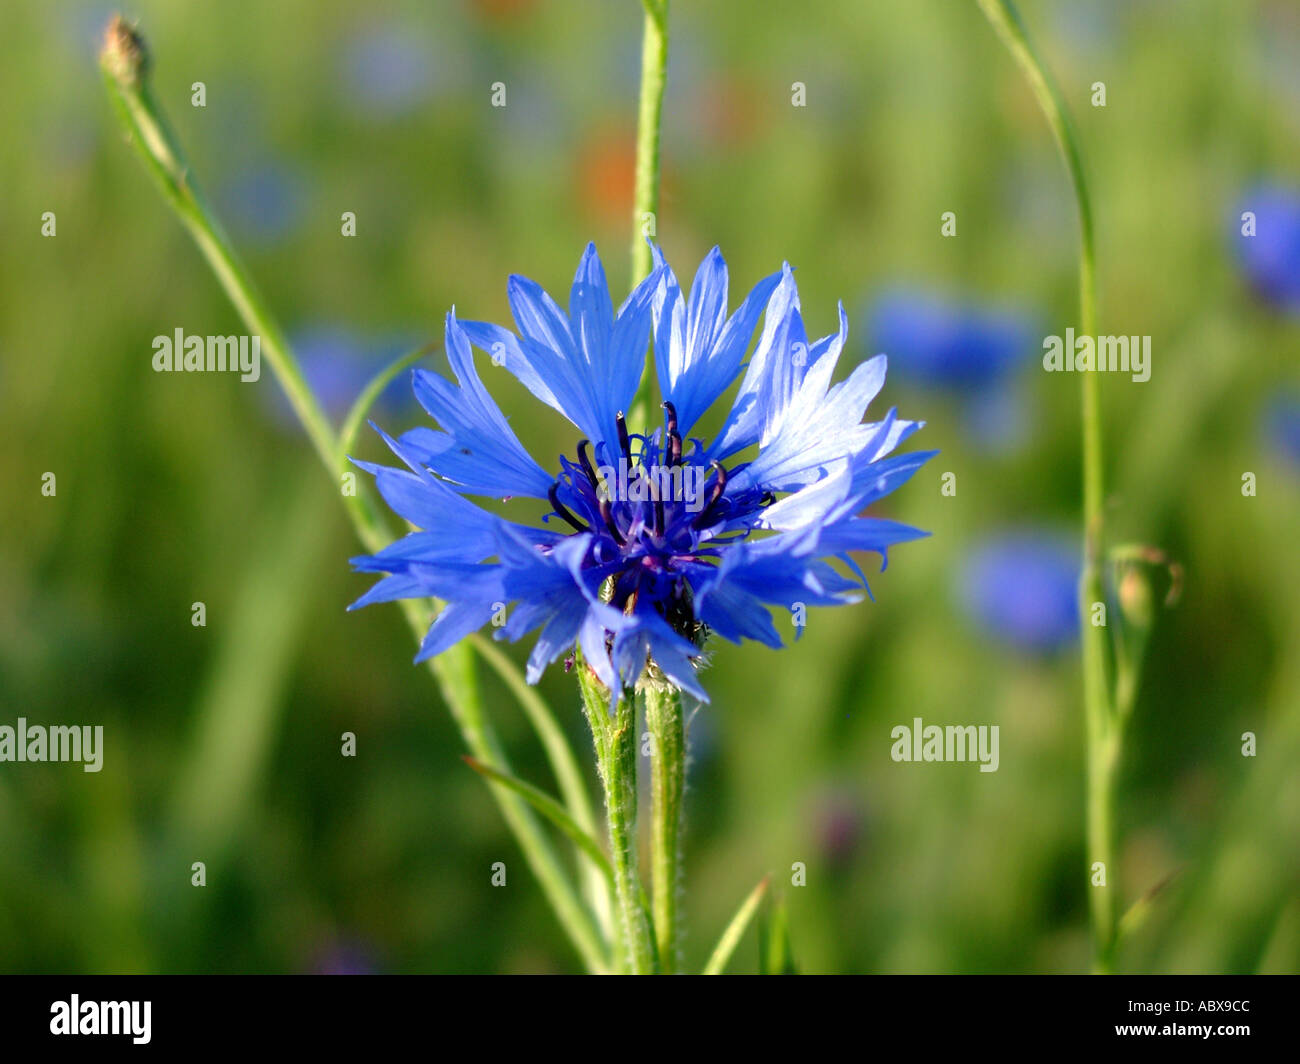 Bluebottle flower blossoming Stock Photo